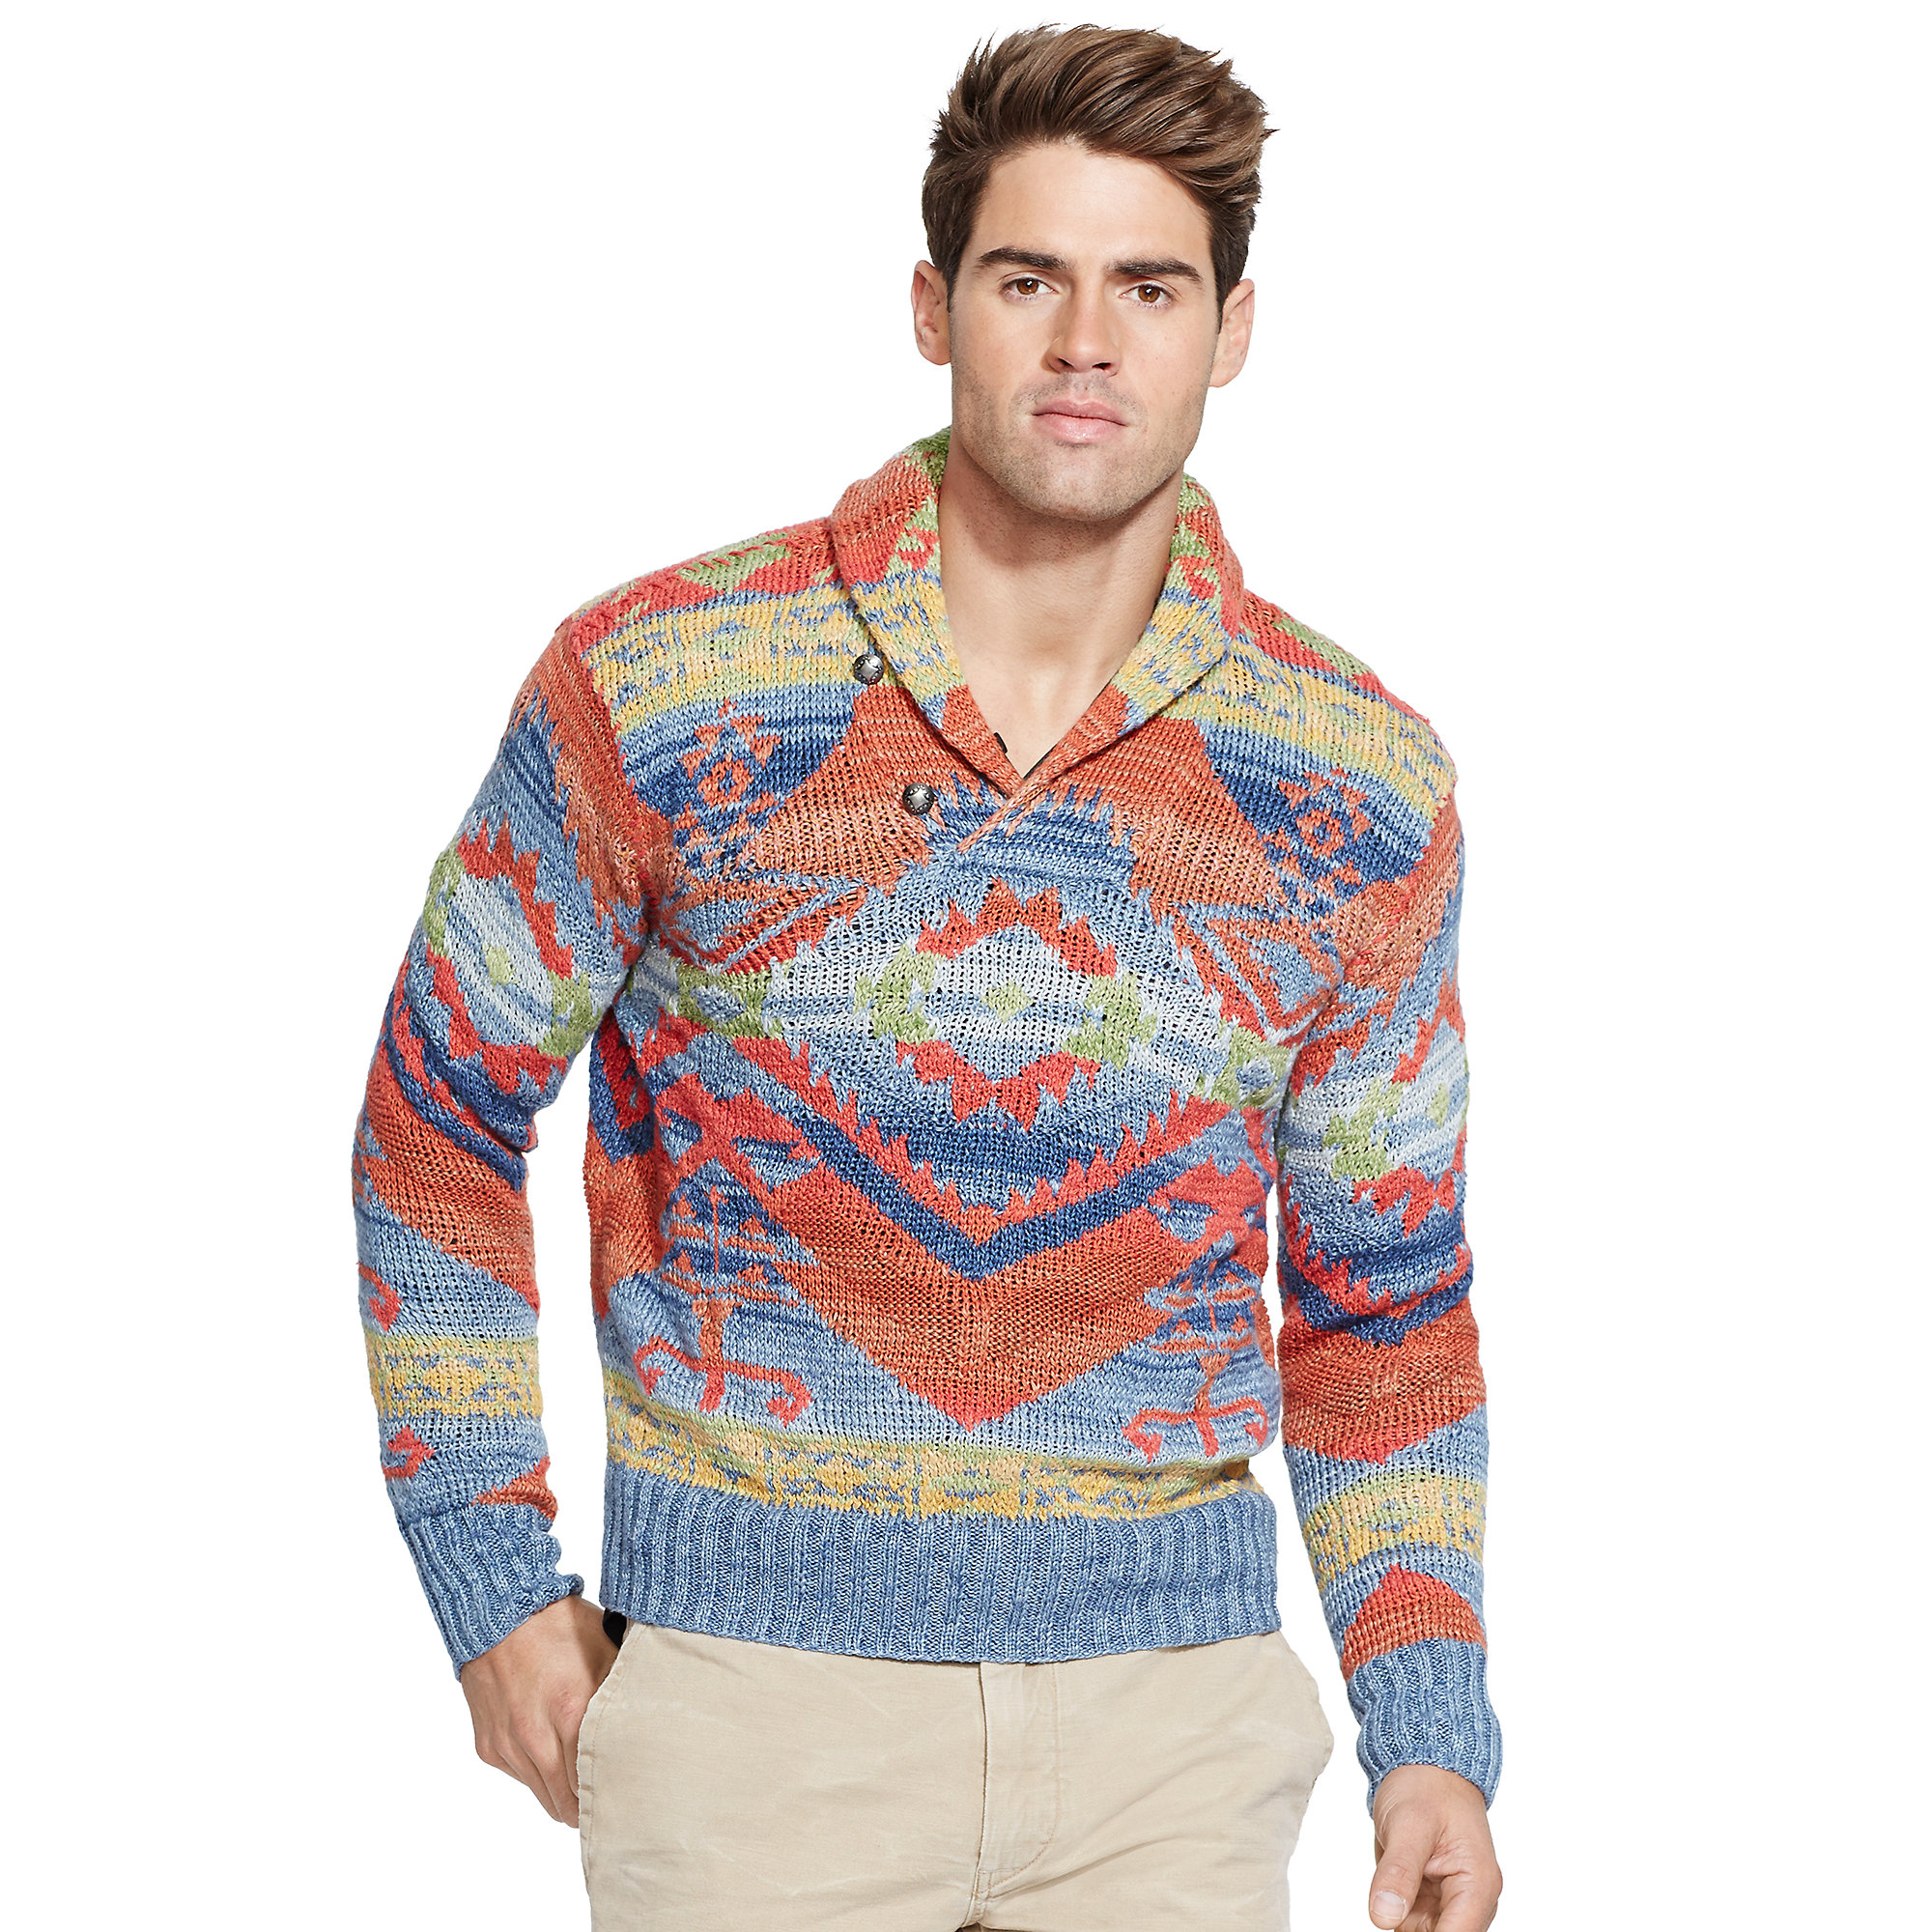 Lyst - Ralph Lauren Southwestern-Inspired Sweater